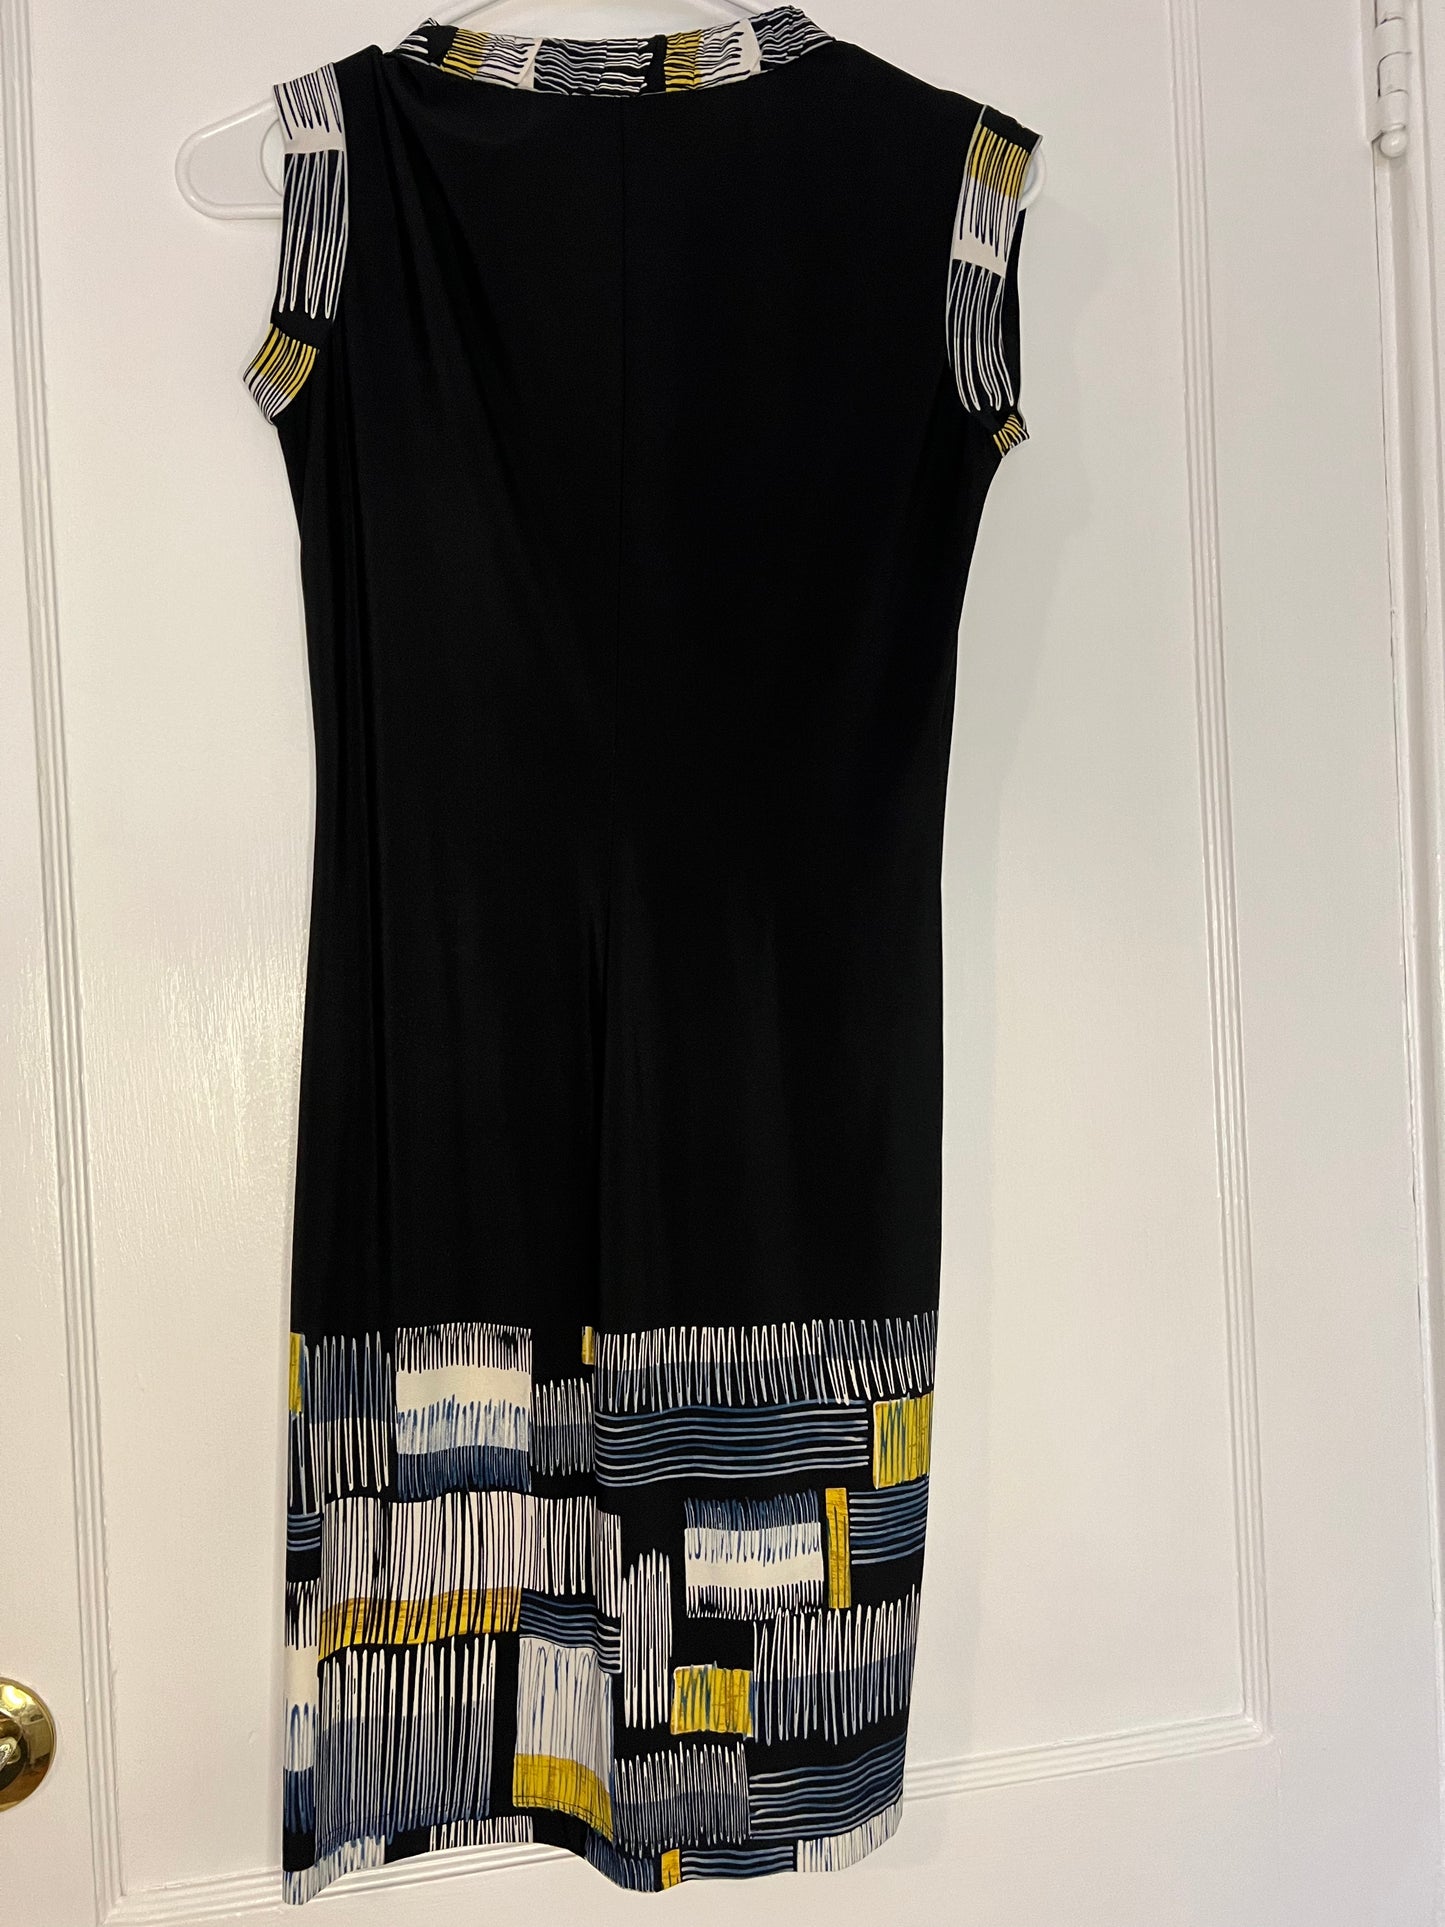 BCBGMAXAZRIA Women's Black White Yellow Patterned Print Sleeveless Dress Size XSP EUC PPU 45208 or Spring Sale